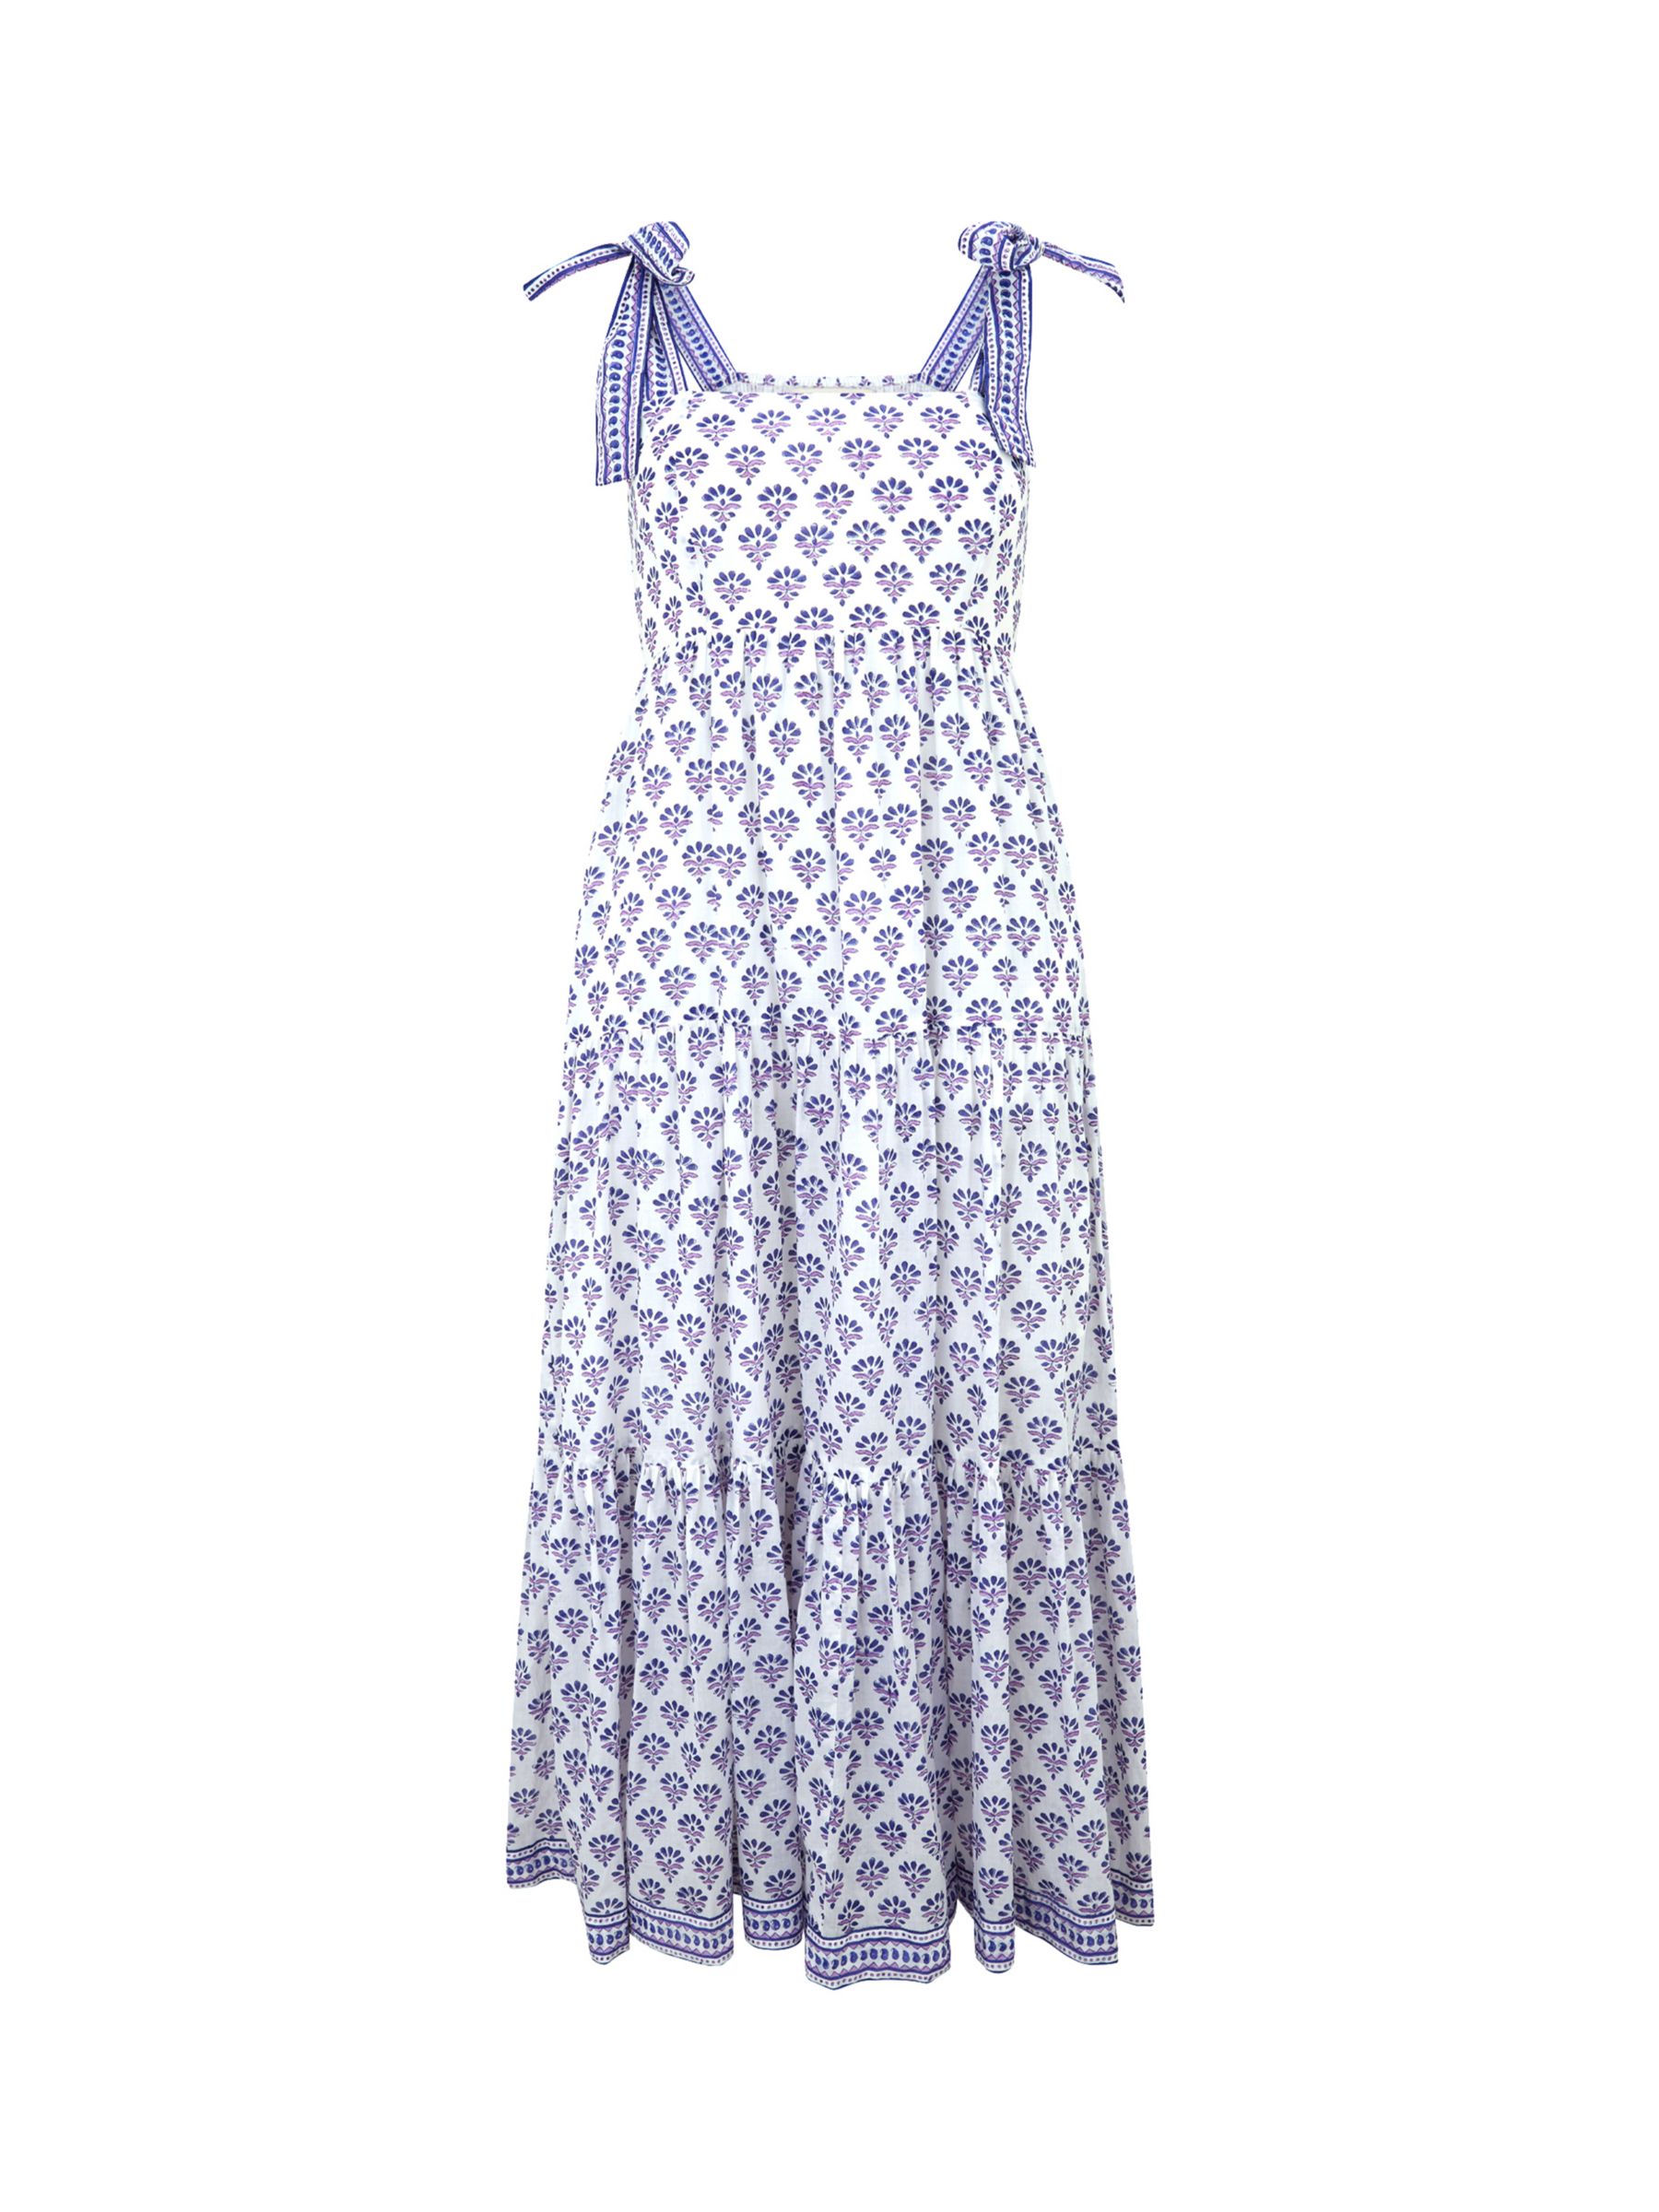 Aspiga Tabitha Block Print Cotton Maxi Dress, Purple/Blue at John Lewis ...